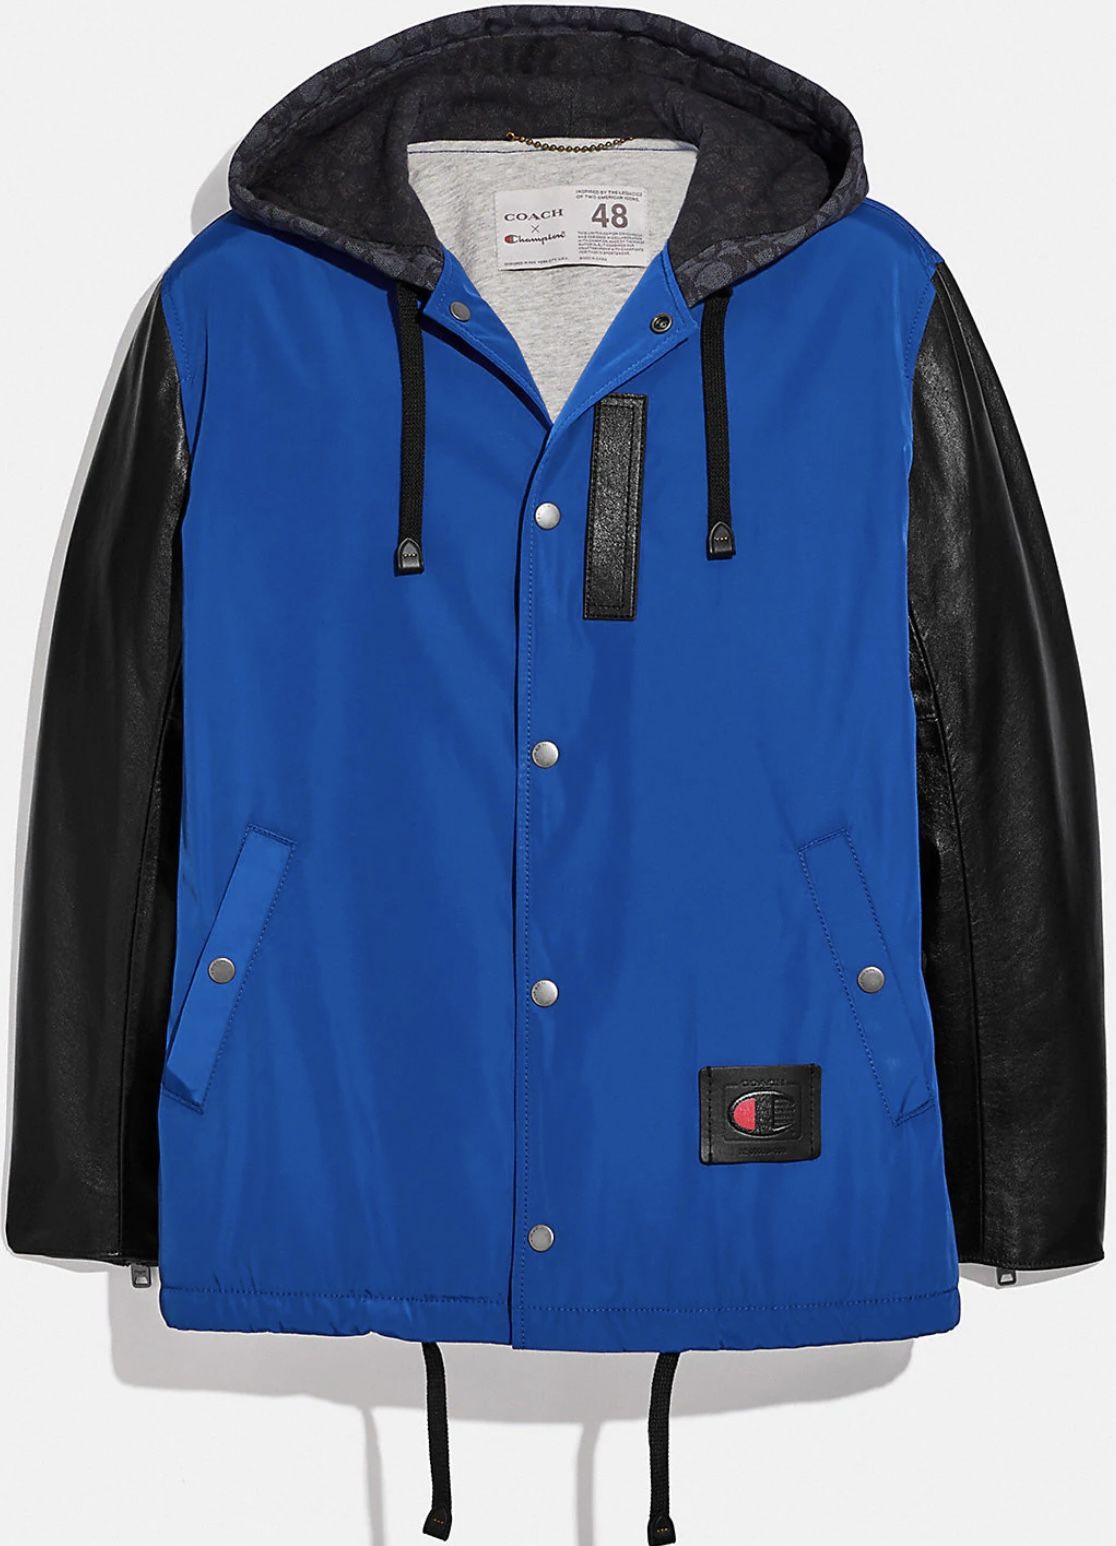 Coach X Champion Coaches Jacket Blue/Black Retail $795